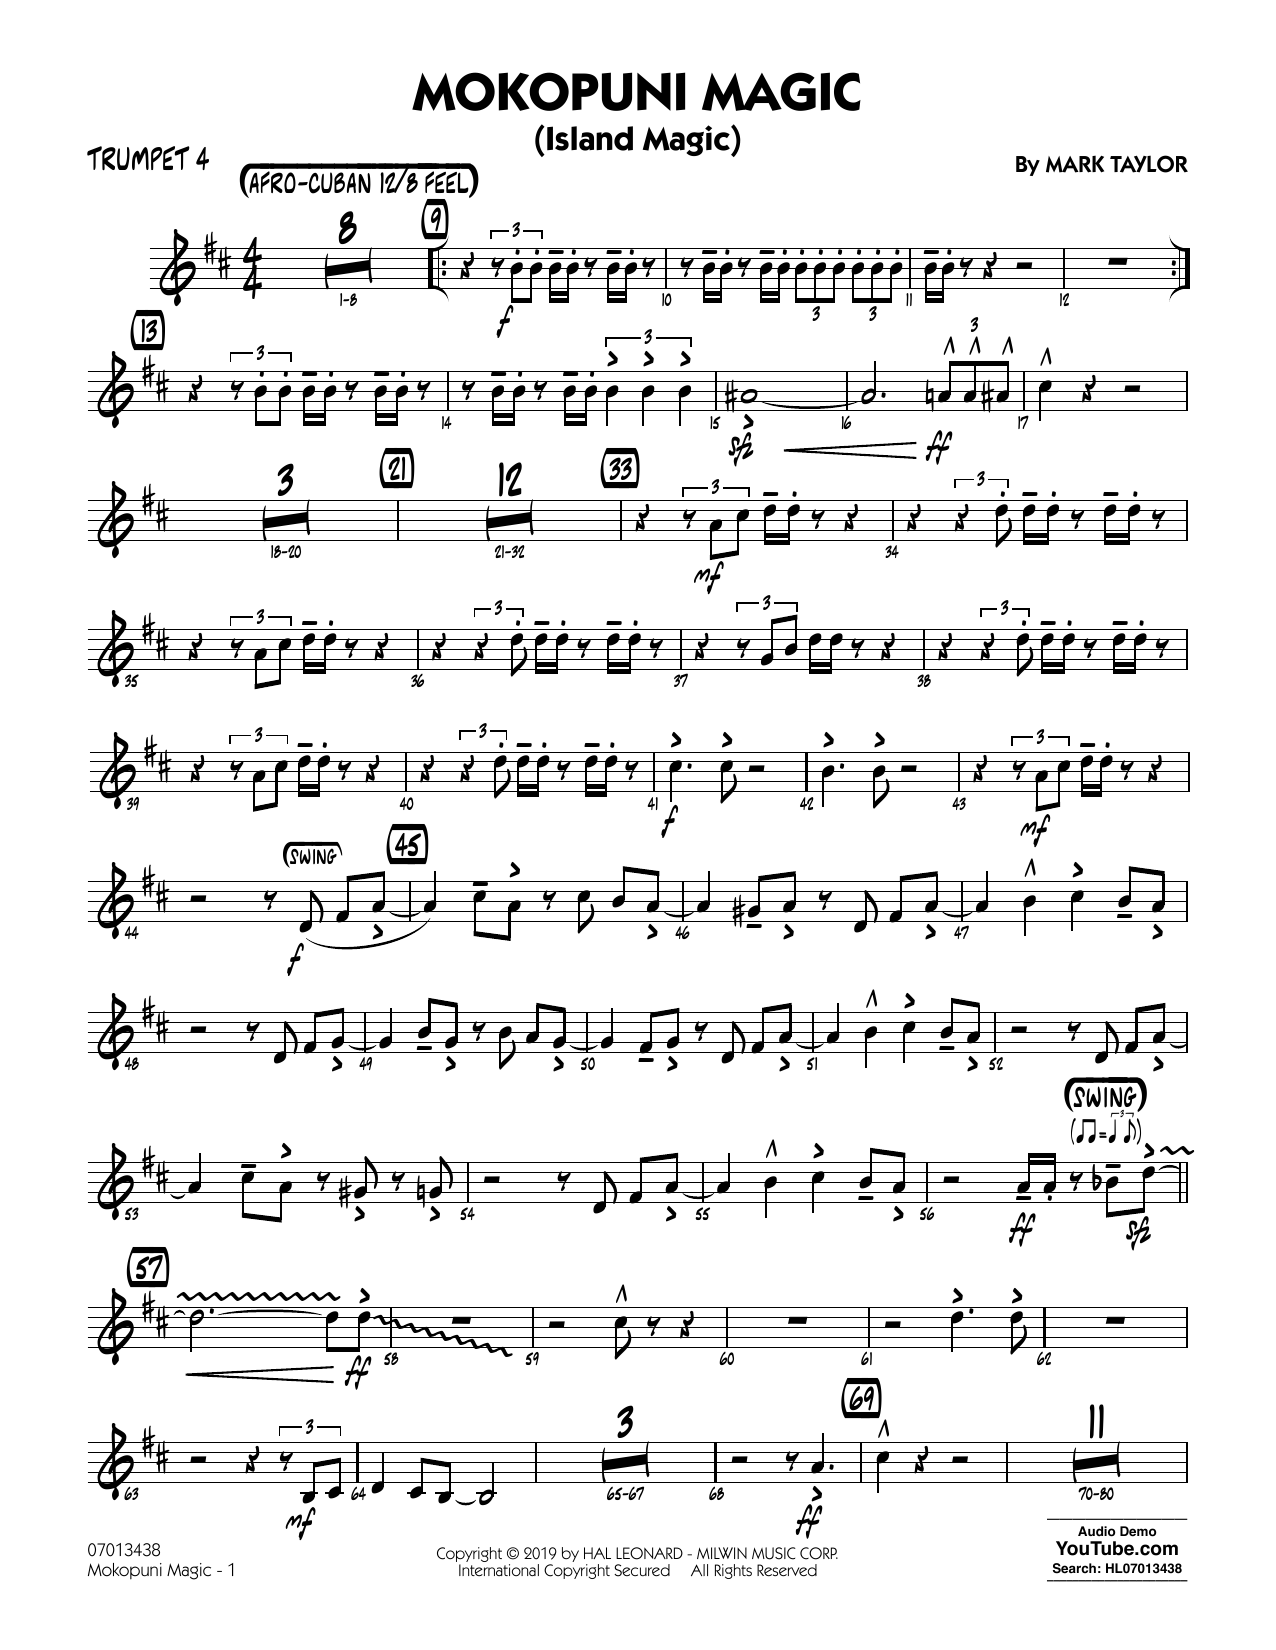 Mark Taylor Mokopuni Magic (Island Magic) - Trumpet 4 Sheet Music Notes & Chords for Jazz Ensemble - Download or Print PDF